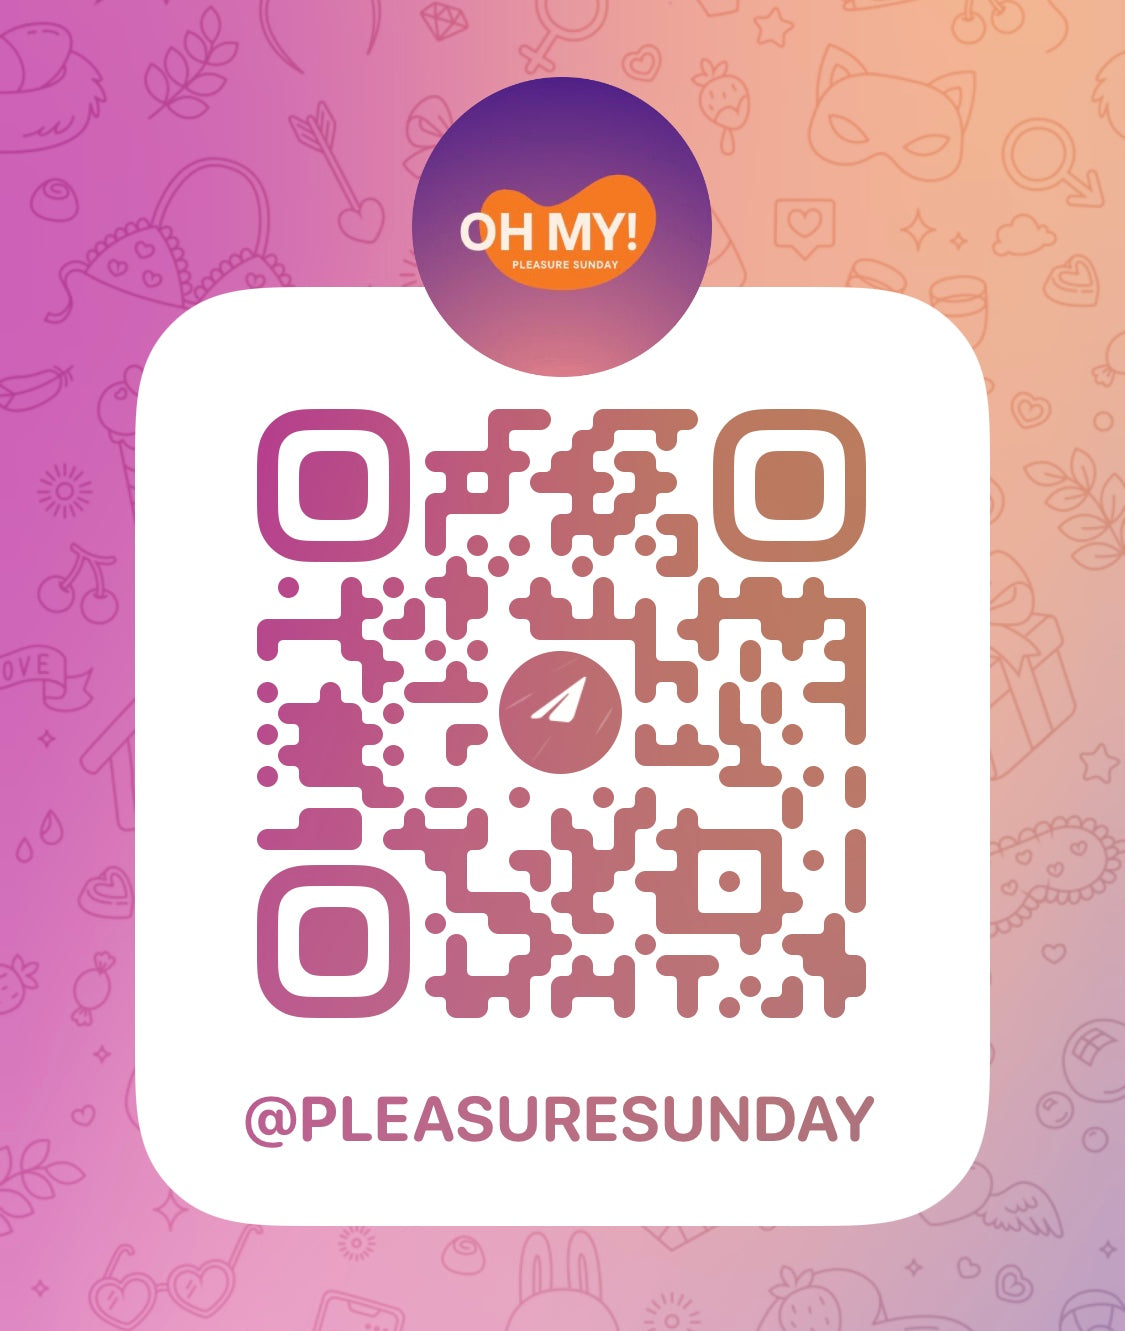 OH MY! FANTASY_Pleasure Sunday_Telegram Gruppe